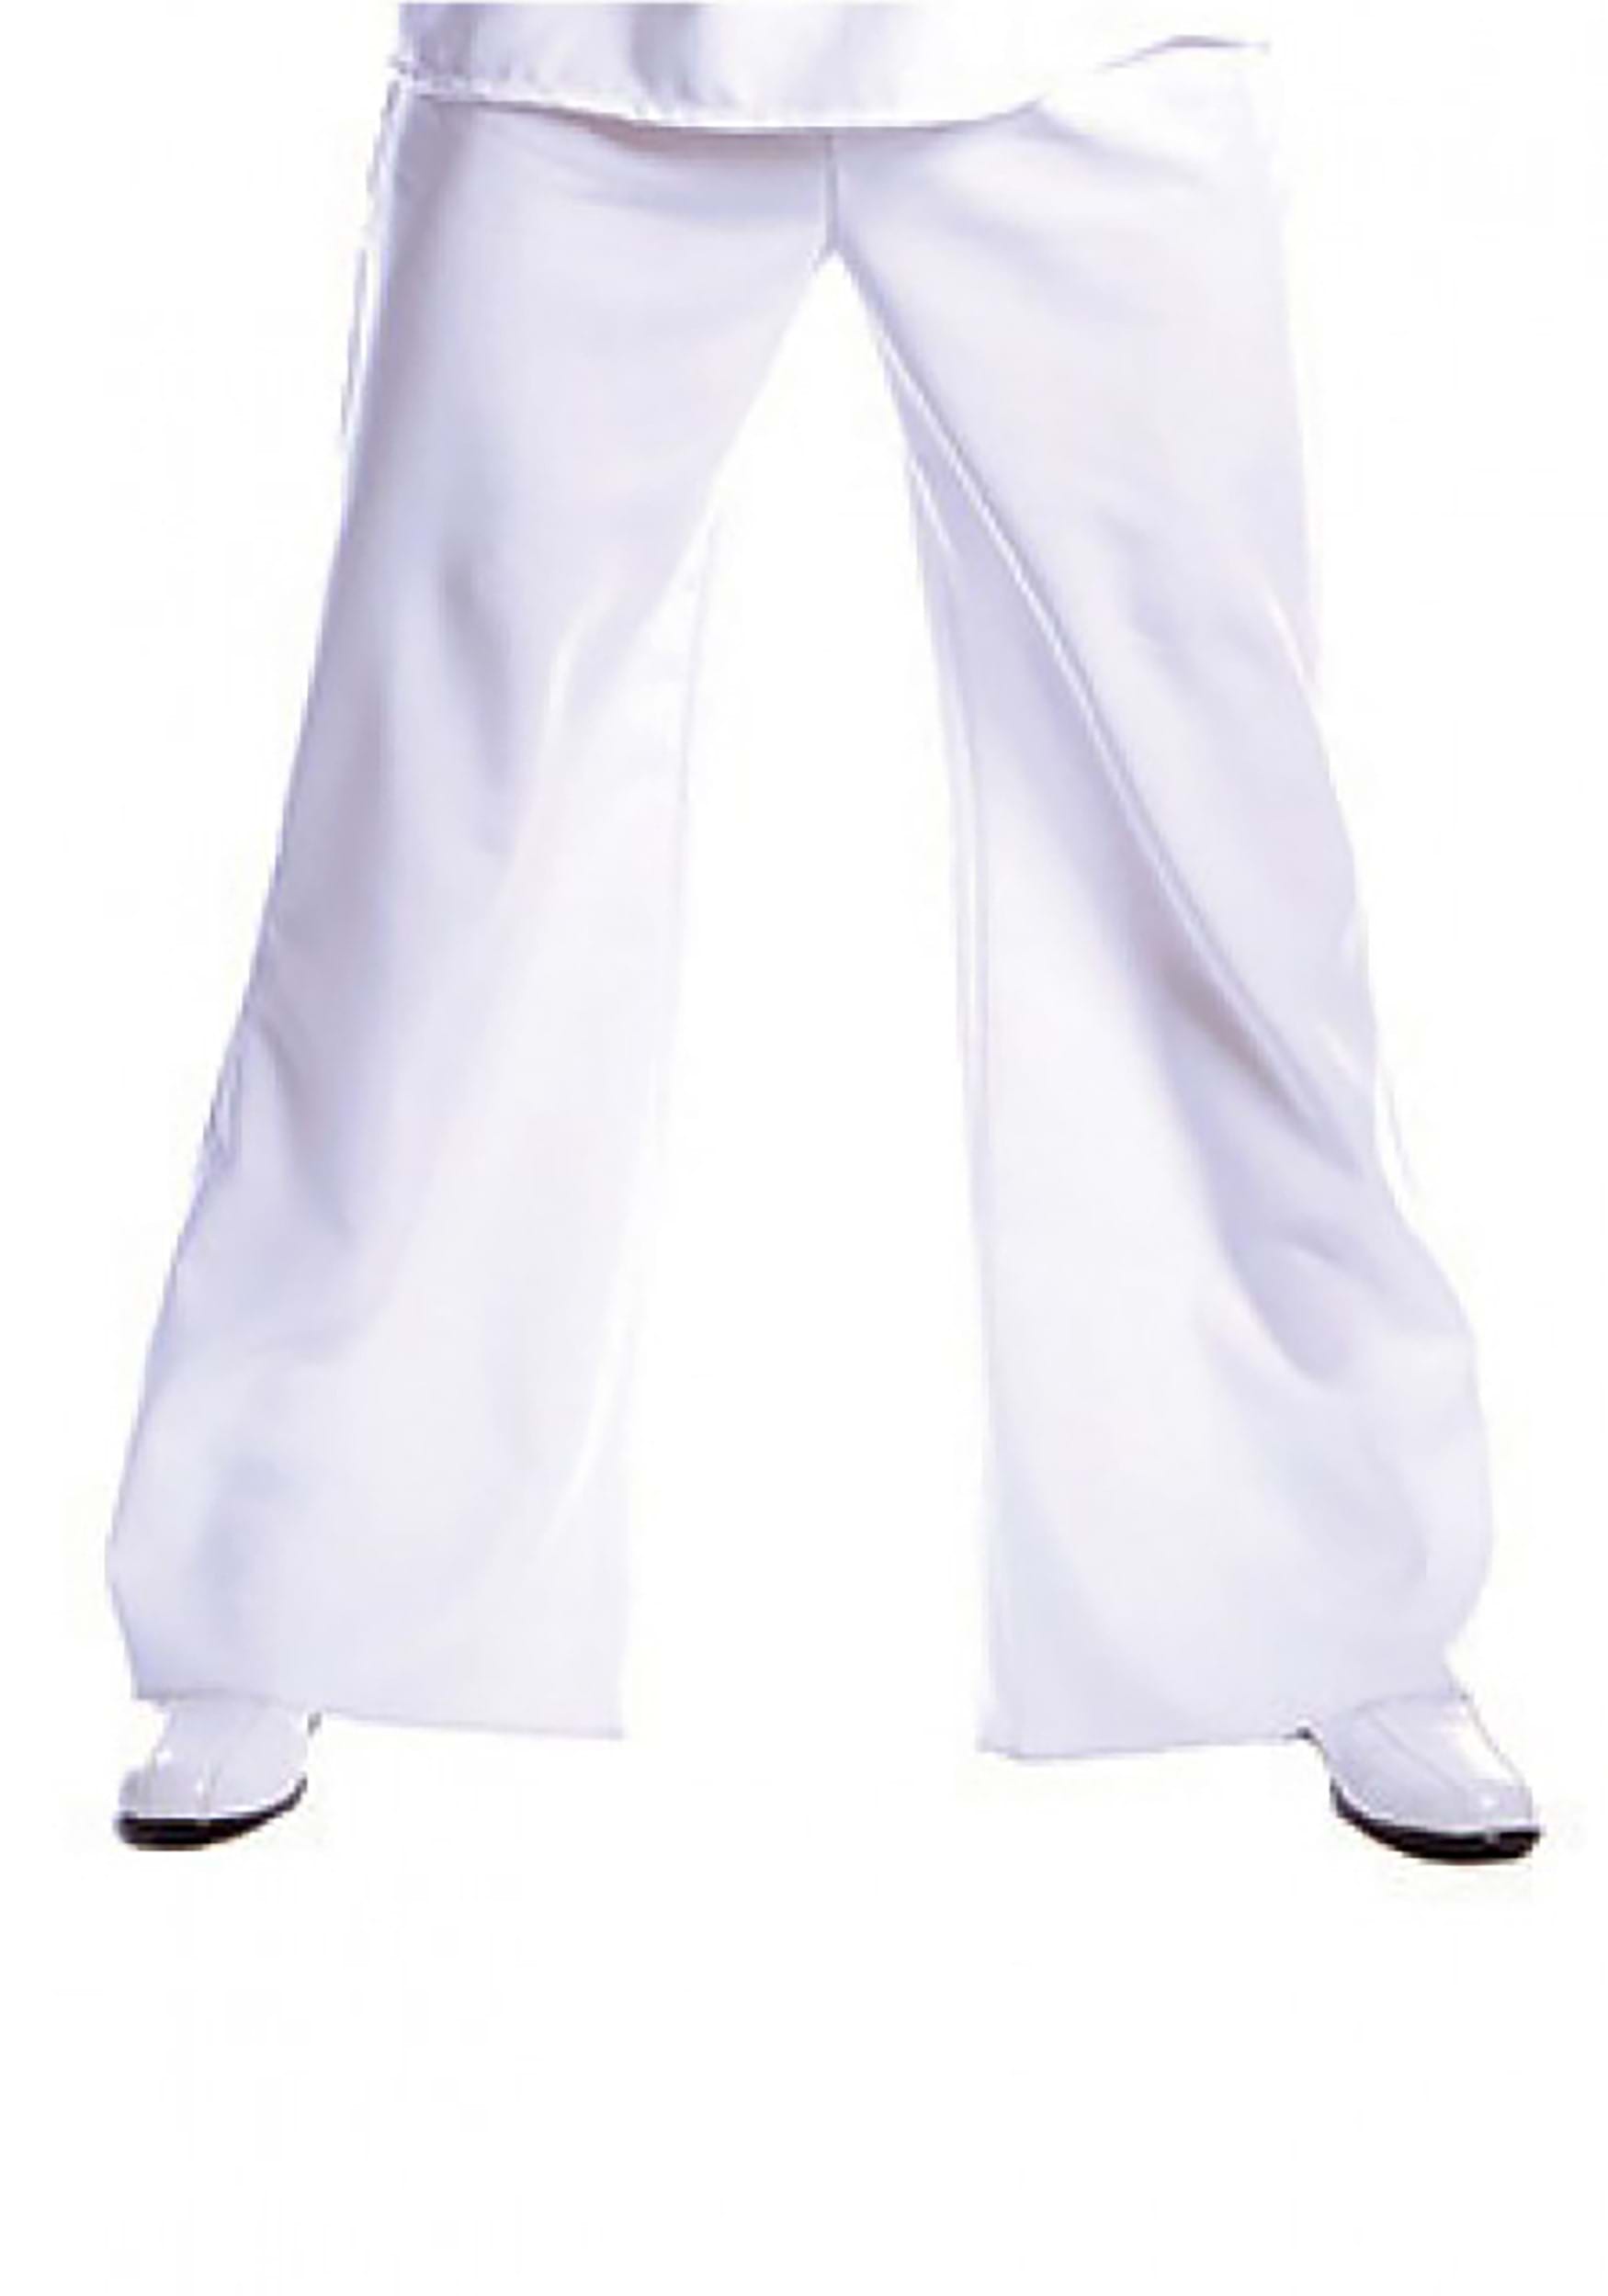 Plus Size Men's Bell Bottom Sailor Costume Pants